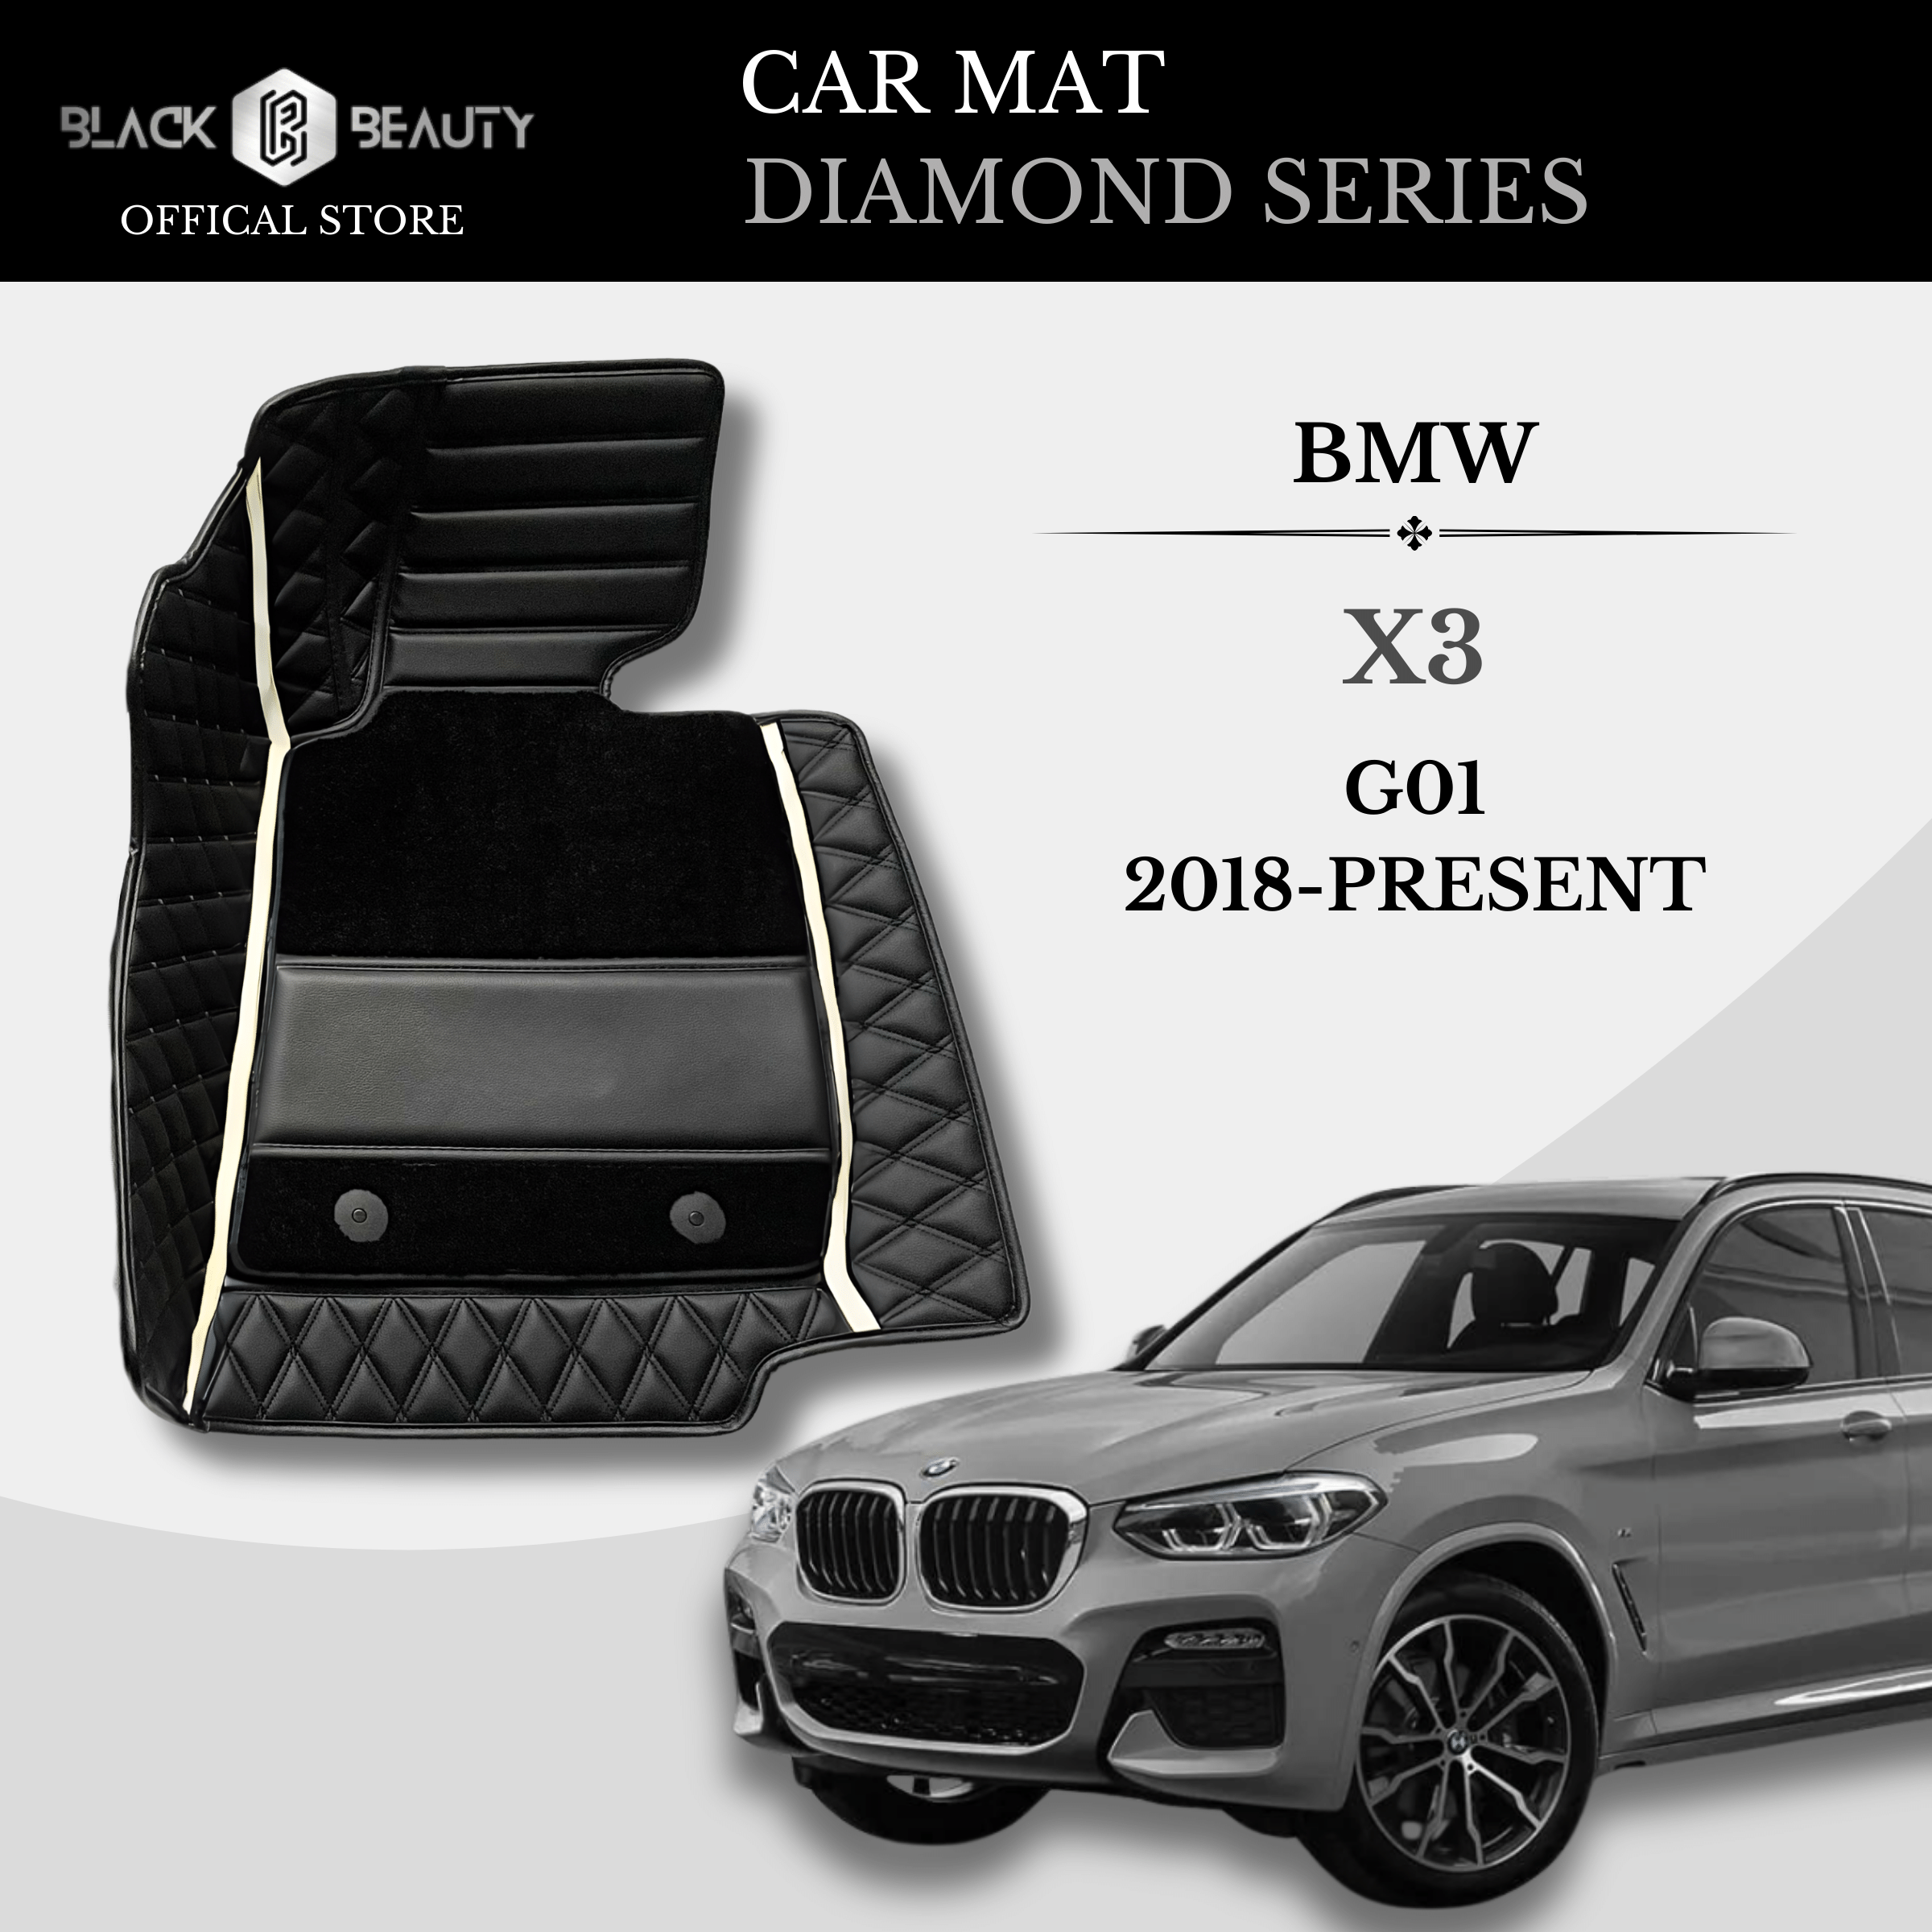 BMW X3 G01 (2018-Present) - Diamond Series Car Matt